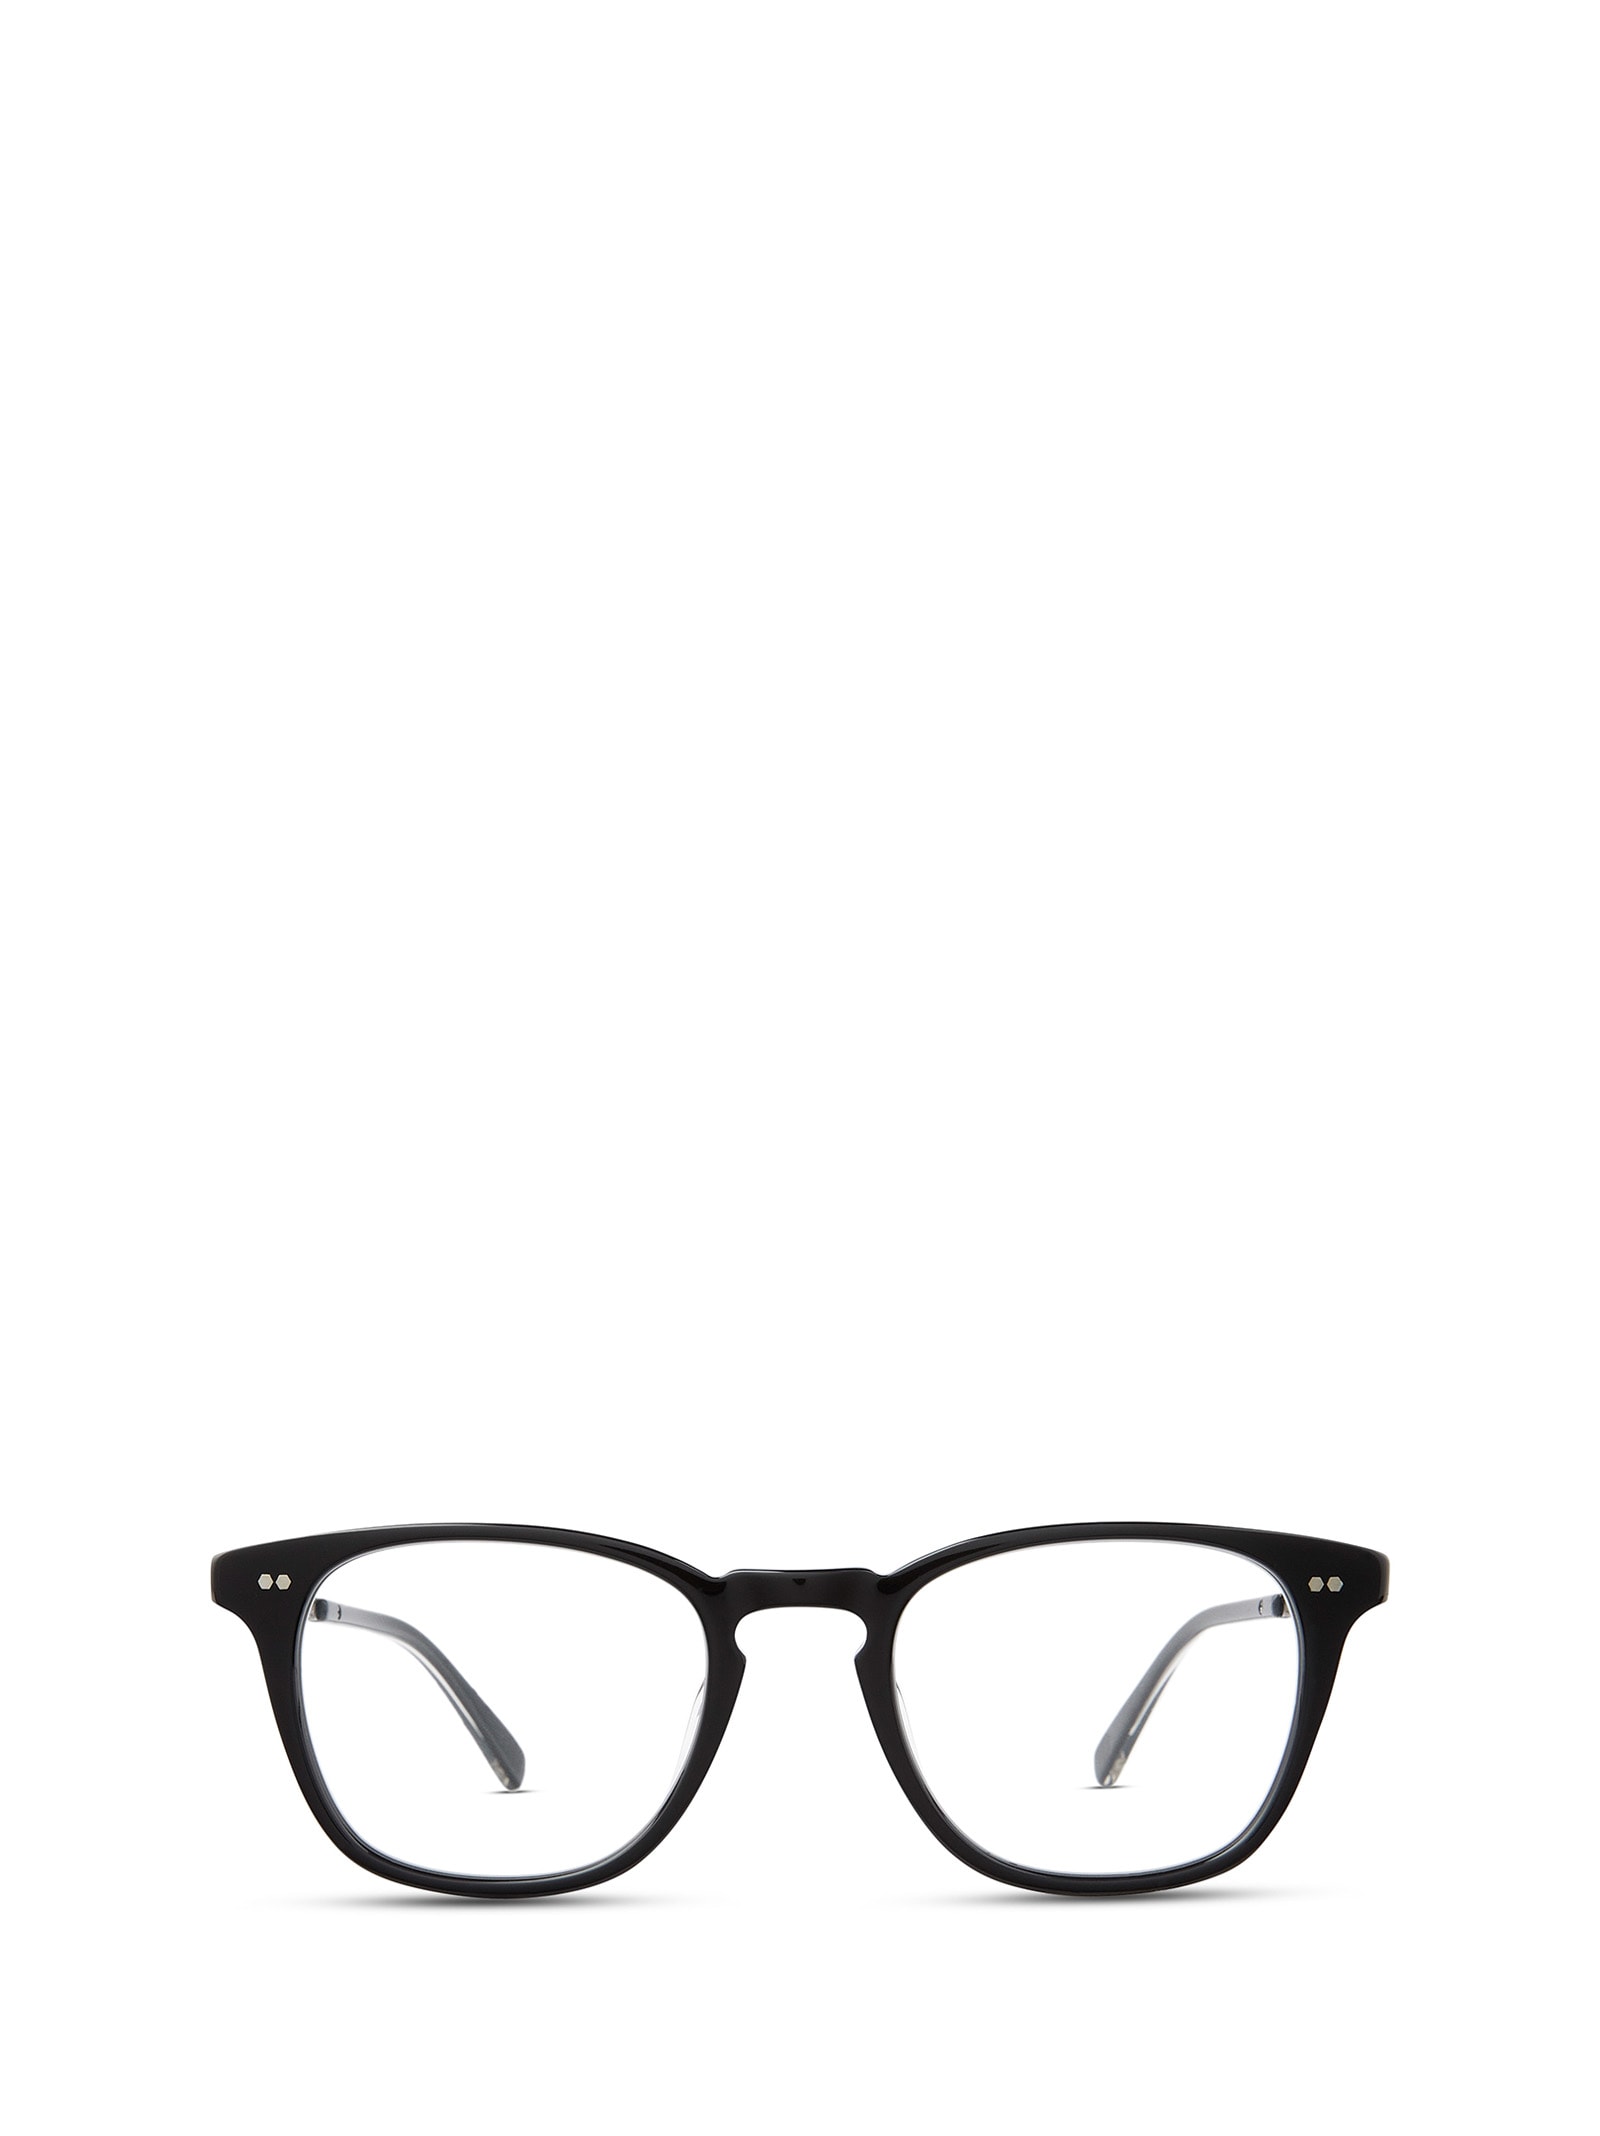 Kanaloa C Black-gunmetal Glasses